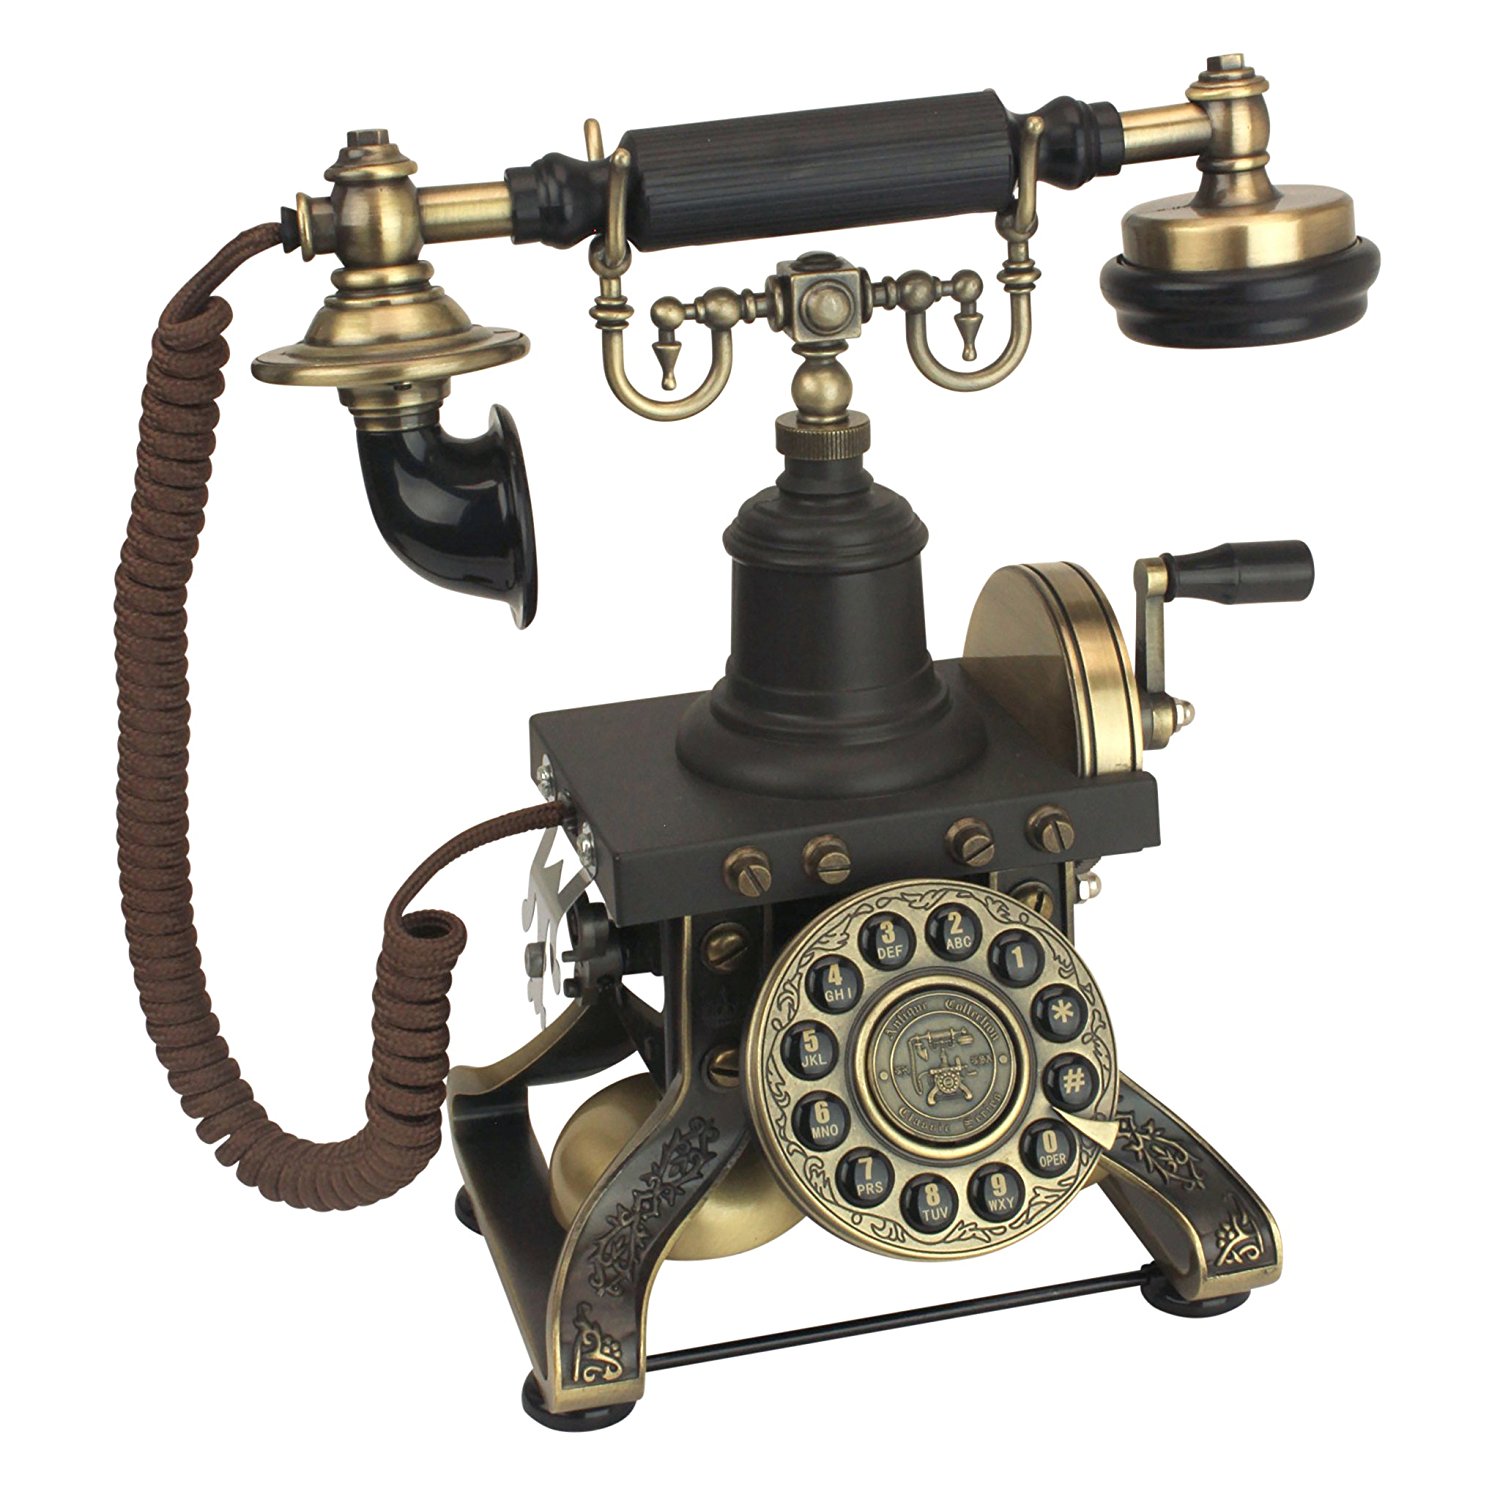 Amazon.com: Design Toscano Antique Phone - The Eiffel Tower 1892 ...